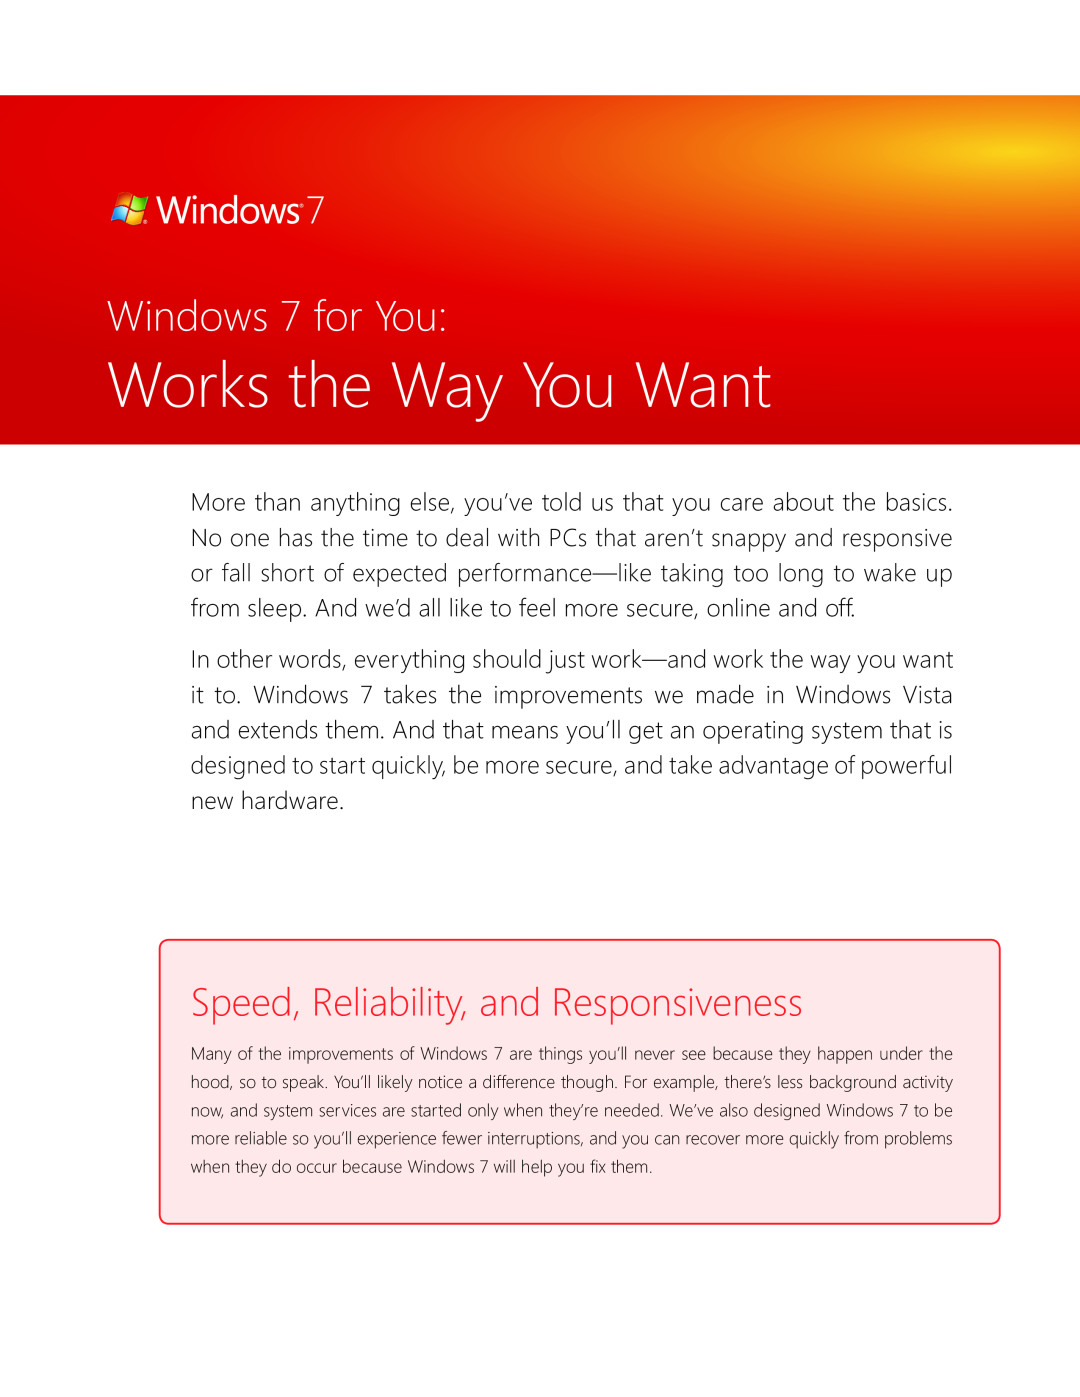 Microsoft GLC00184, GLC00182, GLC01878 Works the Way You Want, Speed, Reliability, and Responsiveness, Windows 7 for You 